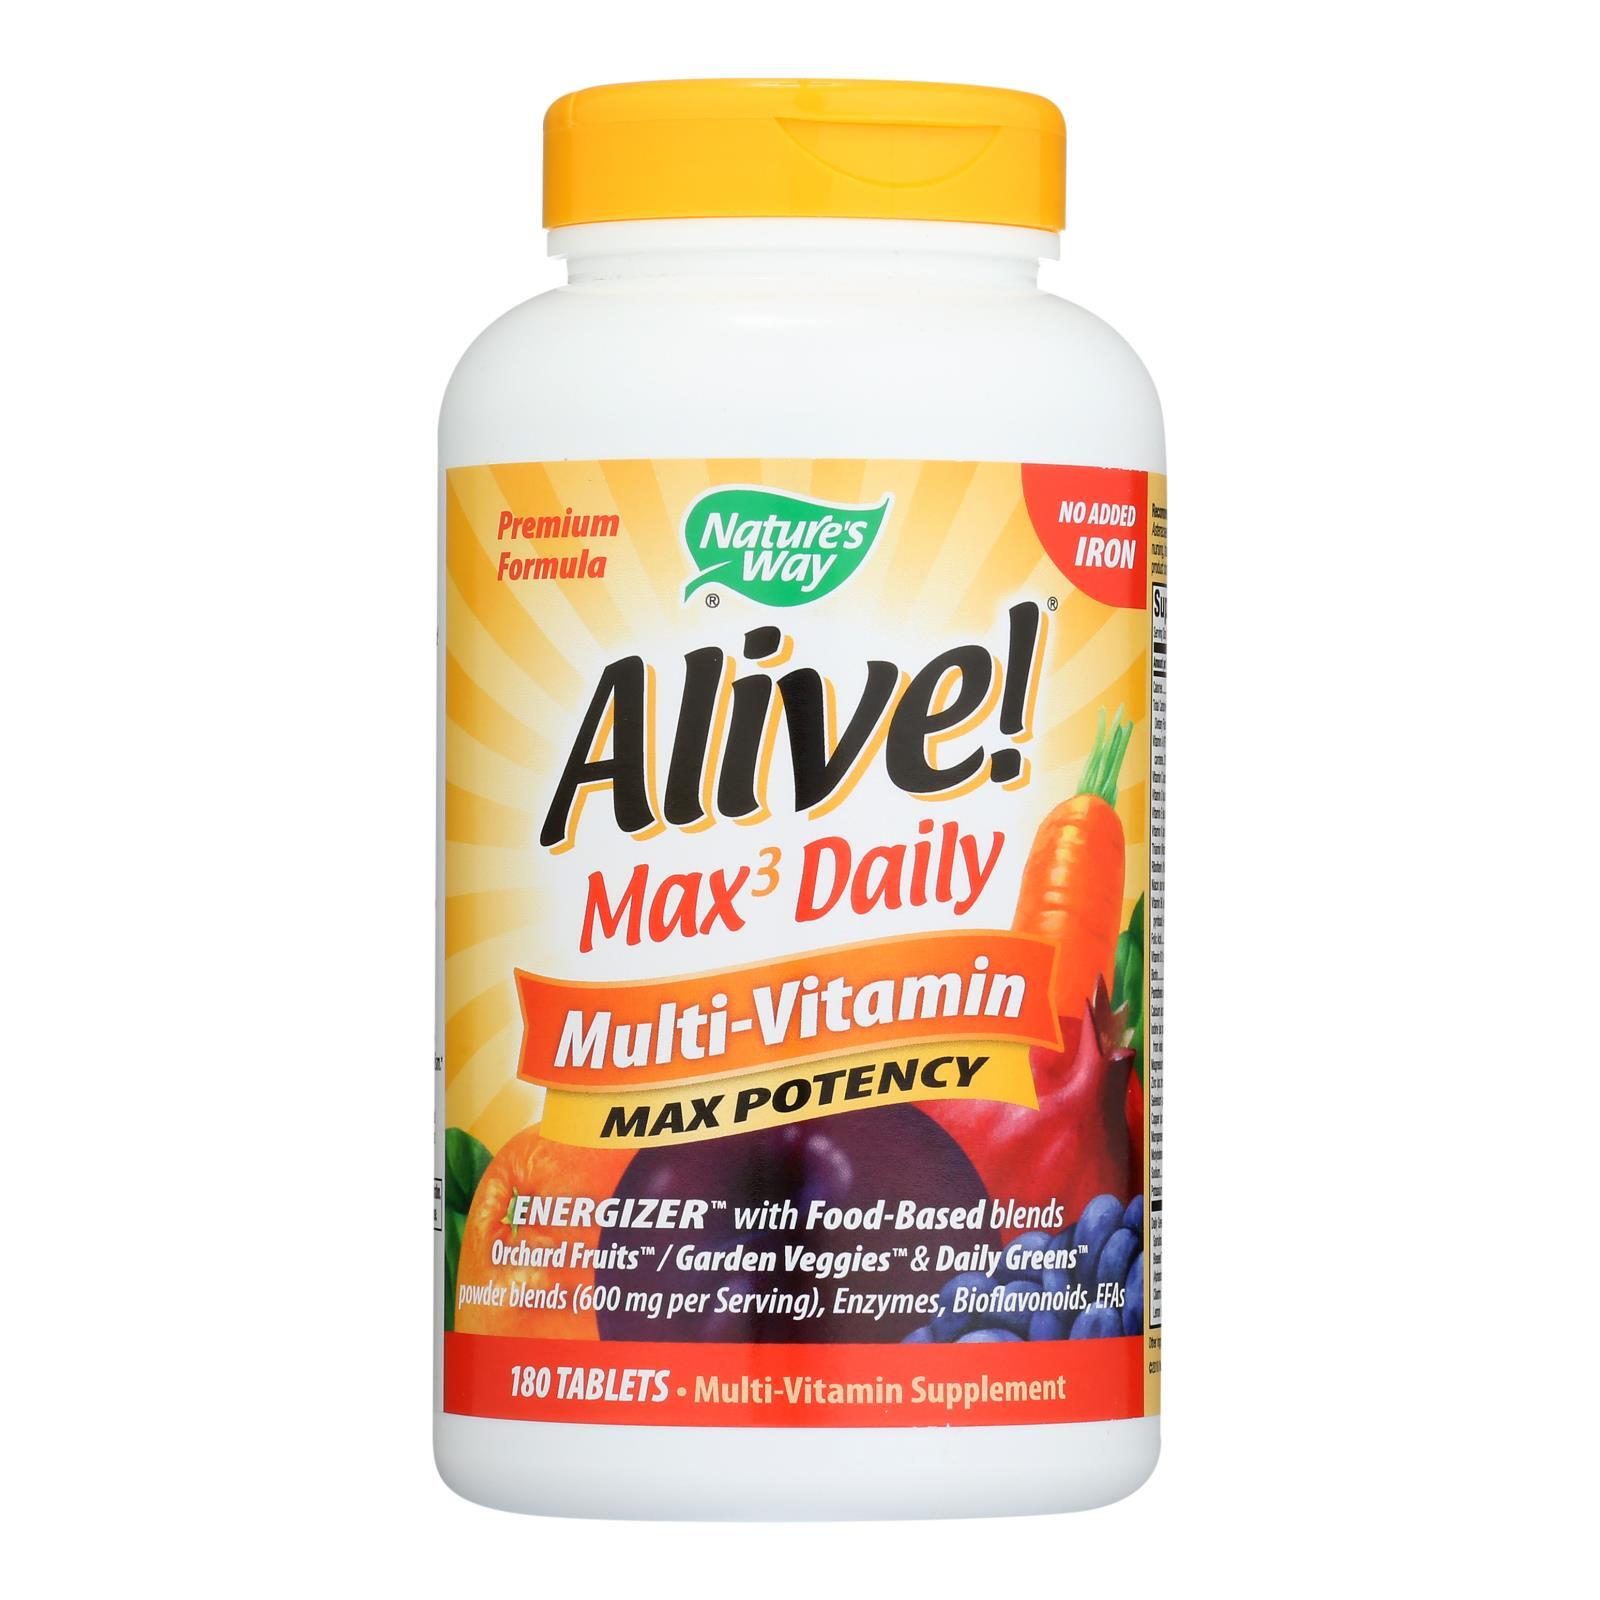 Vitamin мультивитамины. Дейли Макс витамины. Alive! Max3 Daily мультивитамины таб. №180. Мультивитамины Аливе. Натурес вай Аливе.